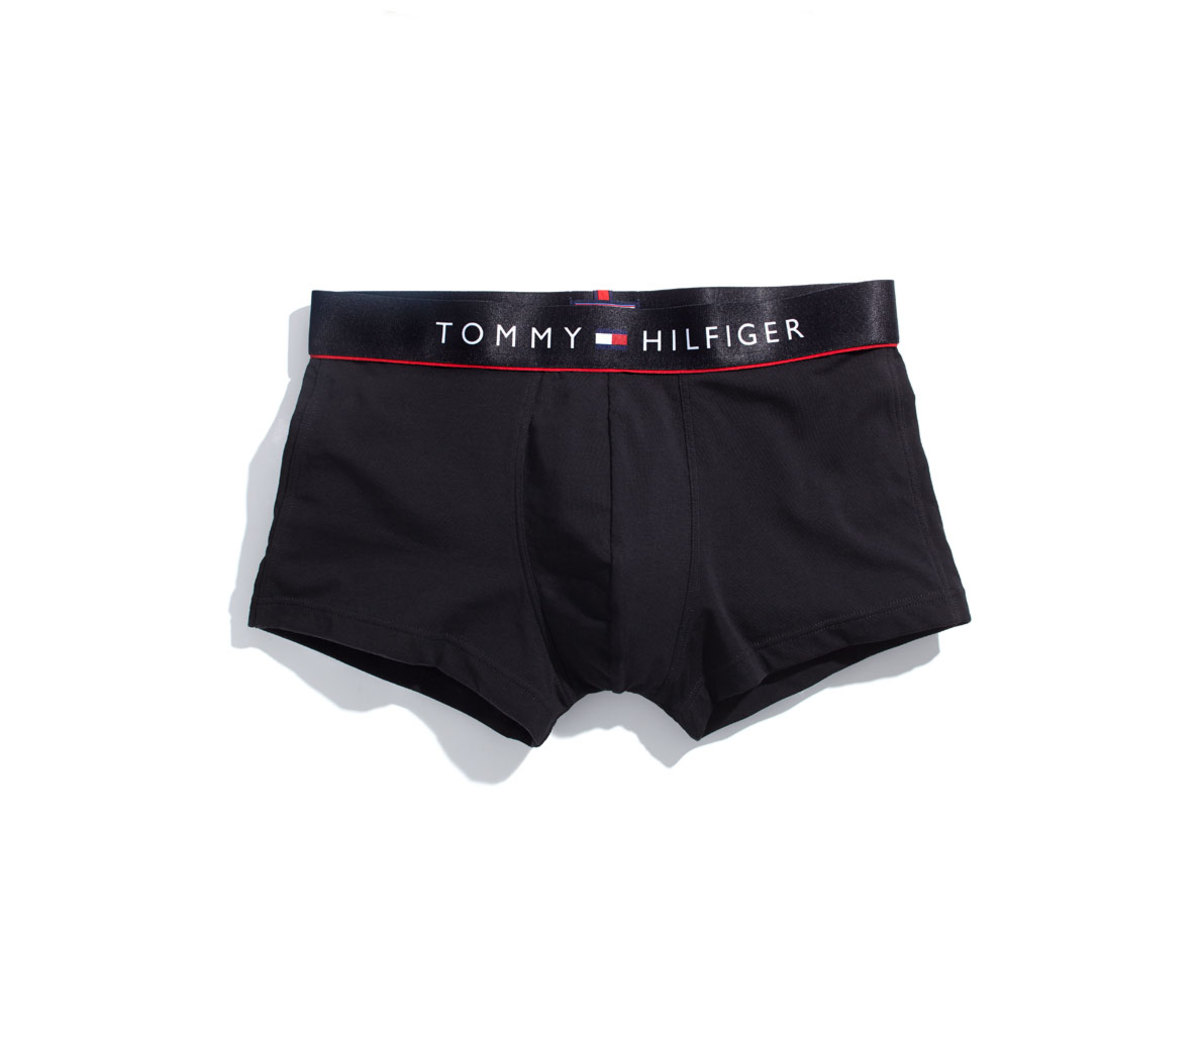 4 Tommy Hilfiger Briefs Cotton Pack Men's Underwear Classic Fit